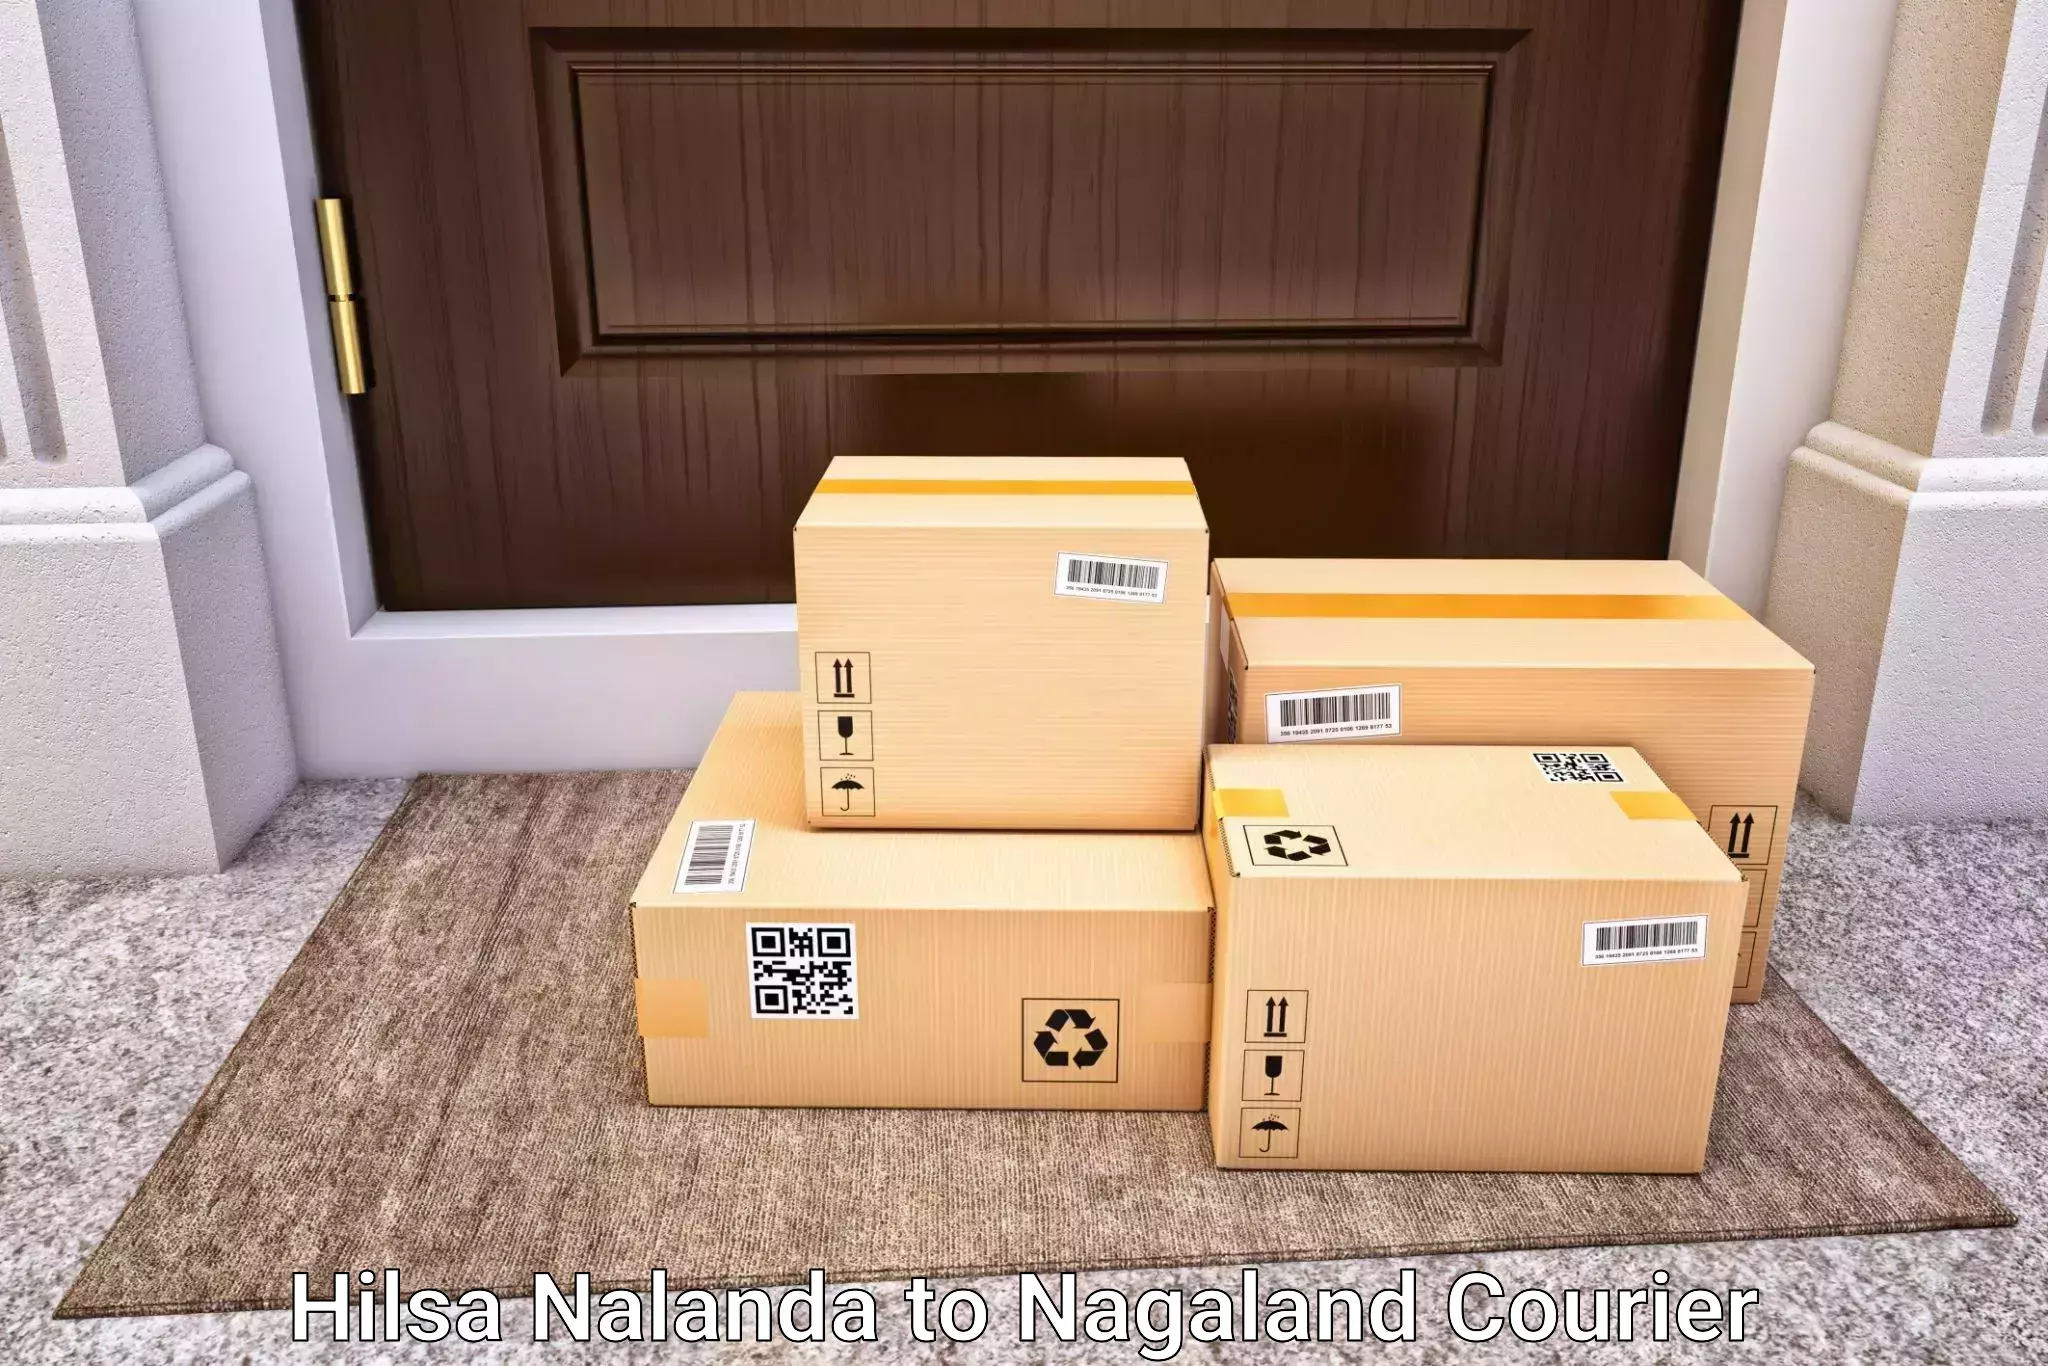 Luggage delivery network Hilsa Nalanda to Nagaland